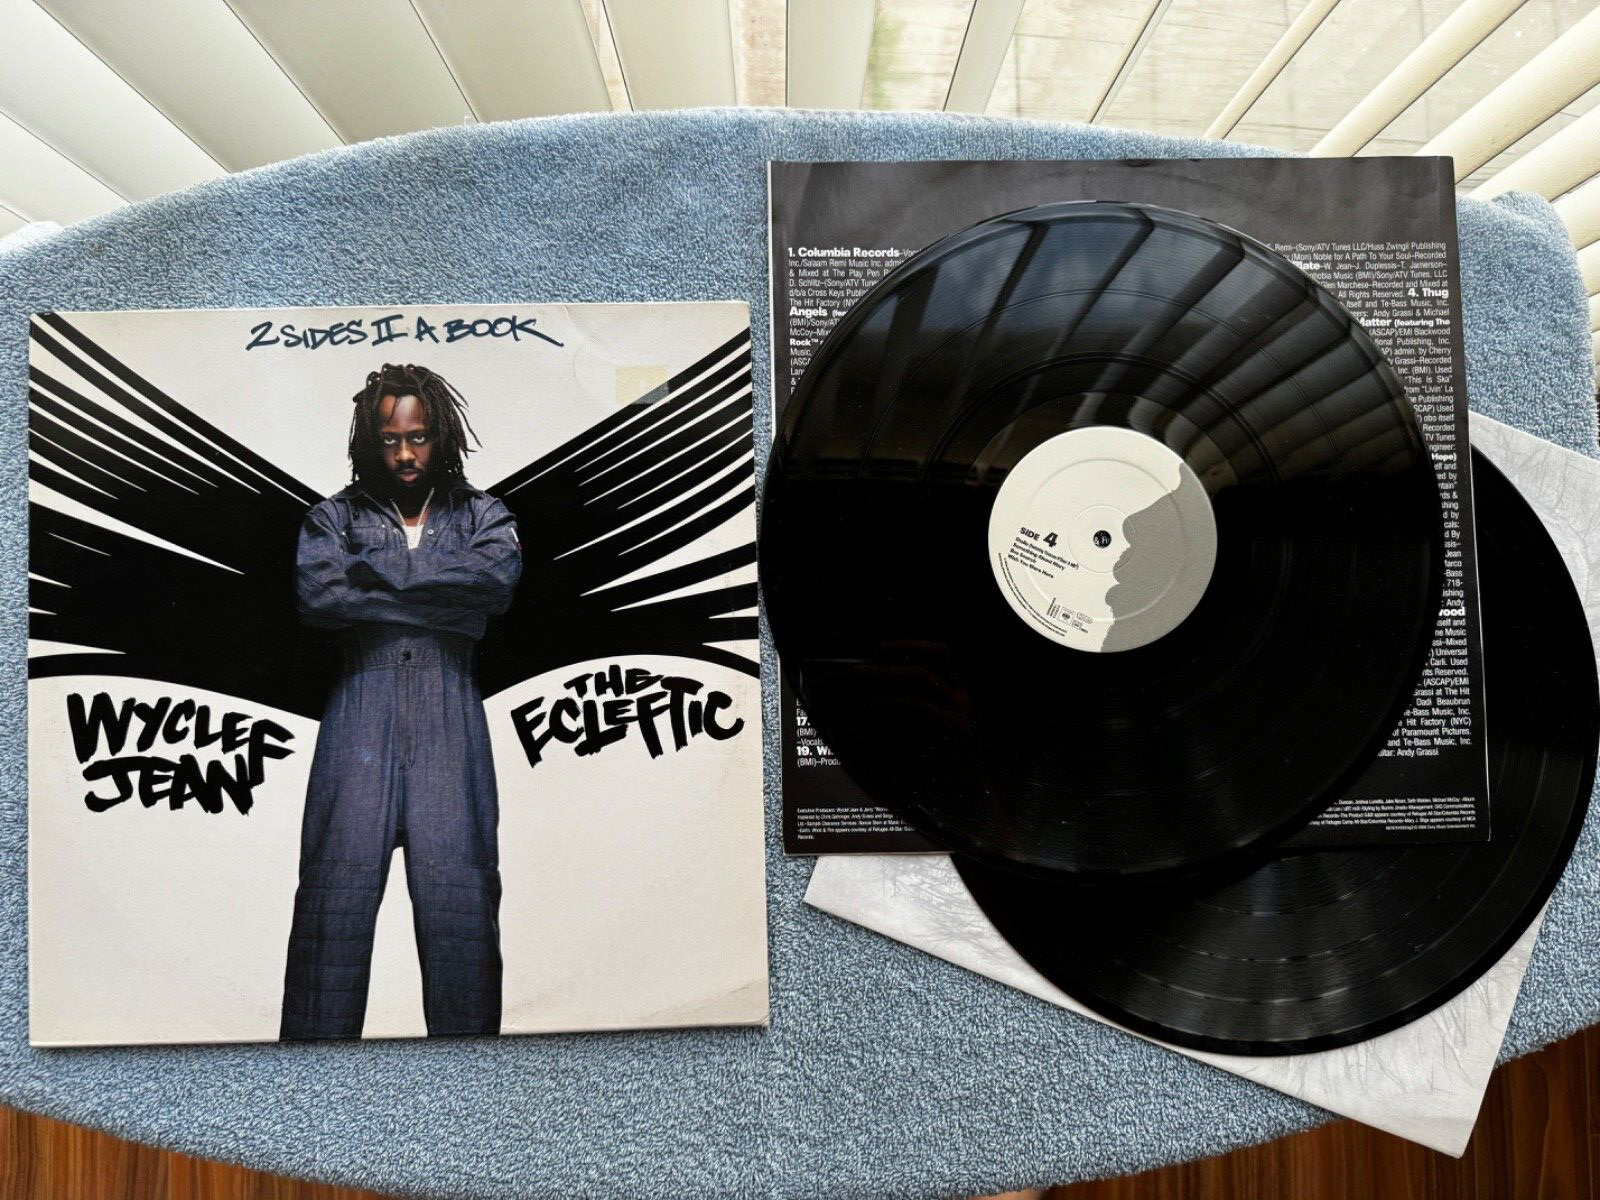 RARE UK/EU 1st PRESS - Wyclef Jean The Ecleftic - 2 Sides II a Book Vinyl Album